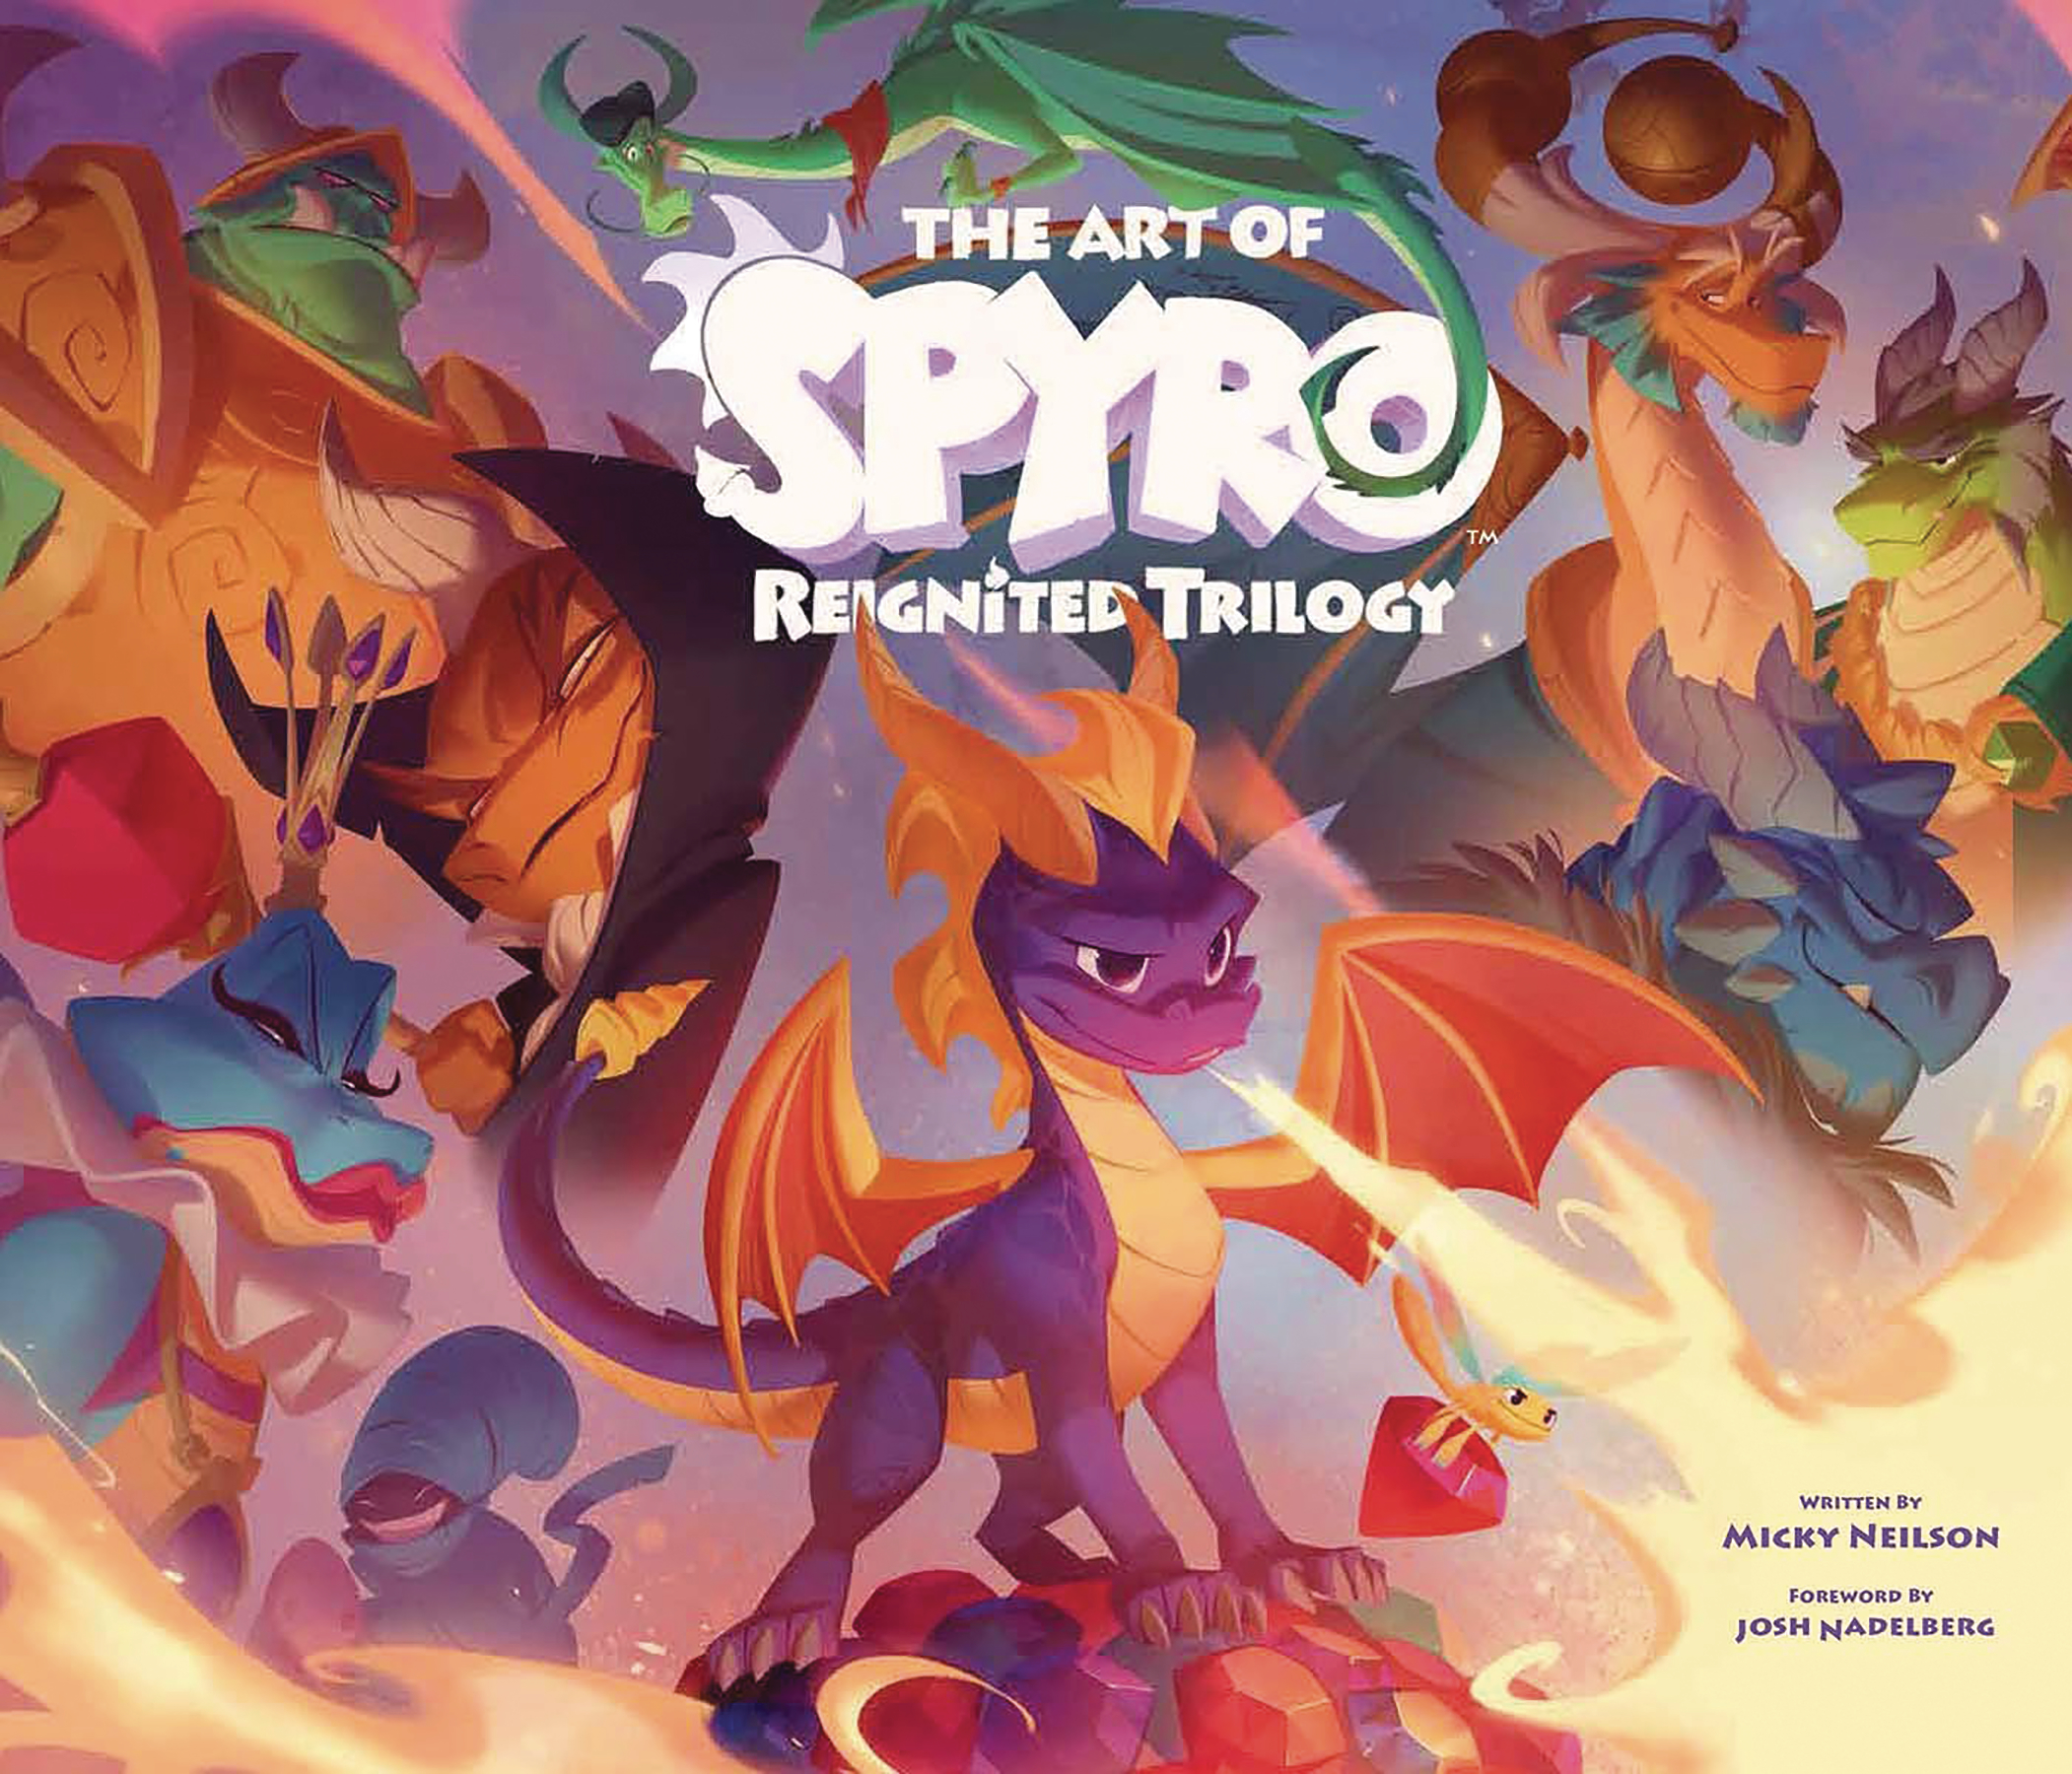 Art of Spyro Reignited Trilogy Hardcover